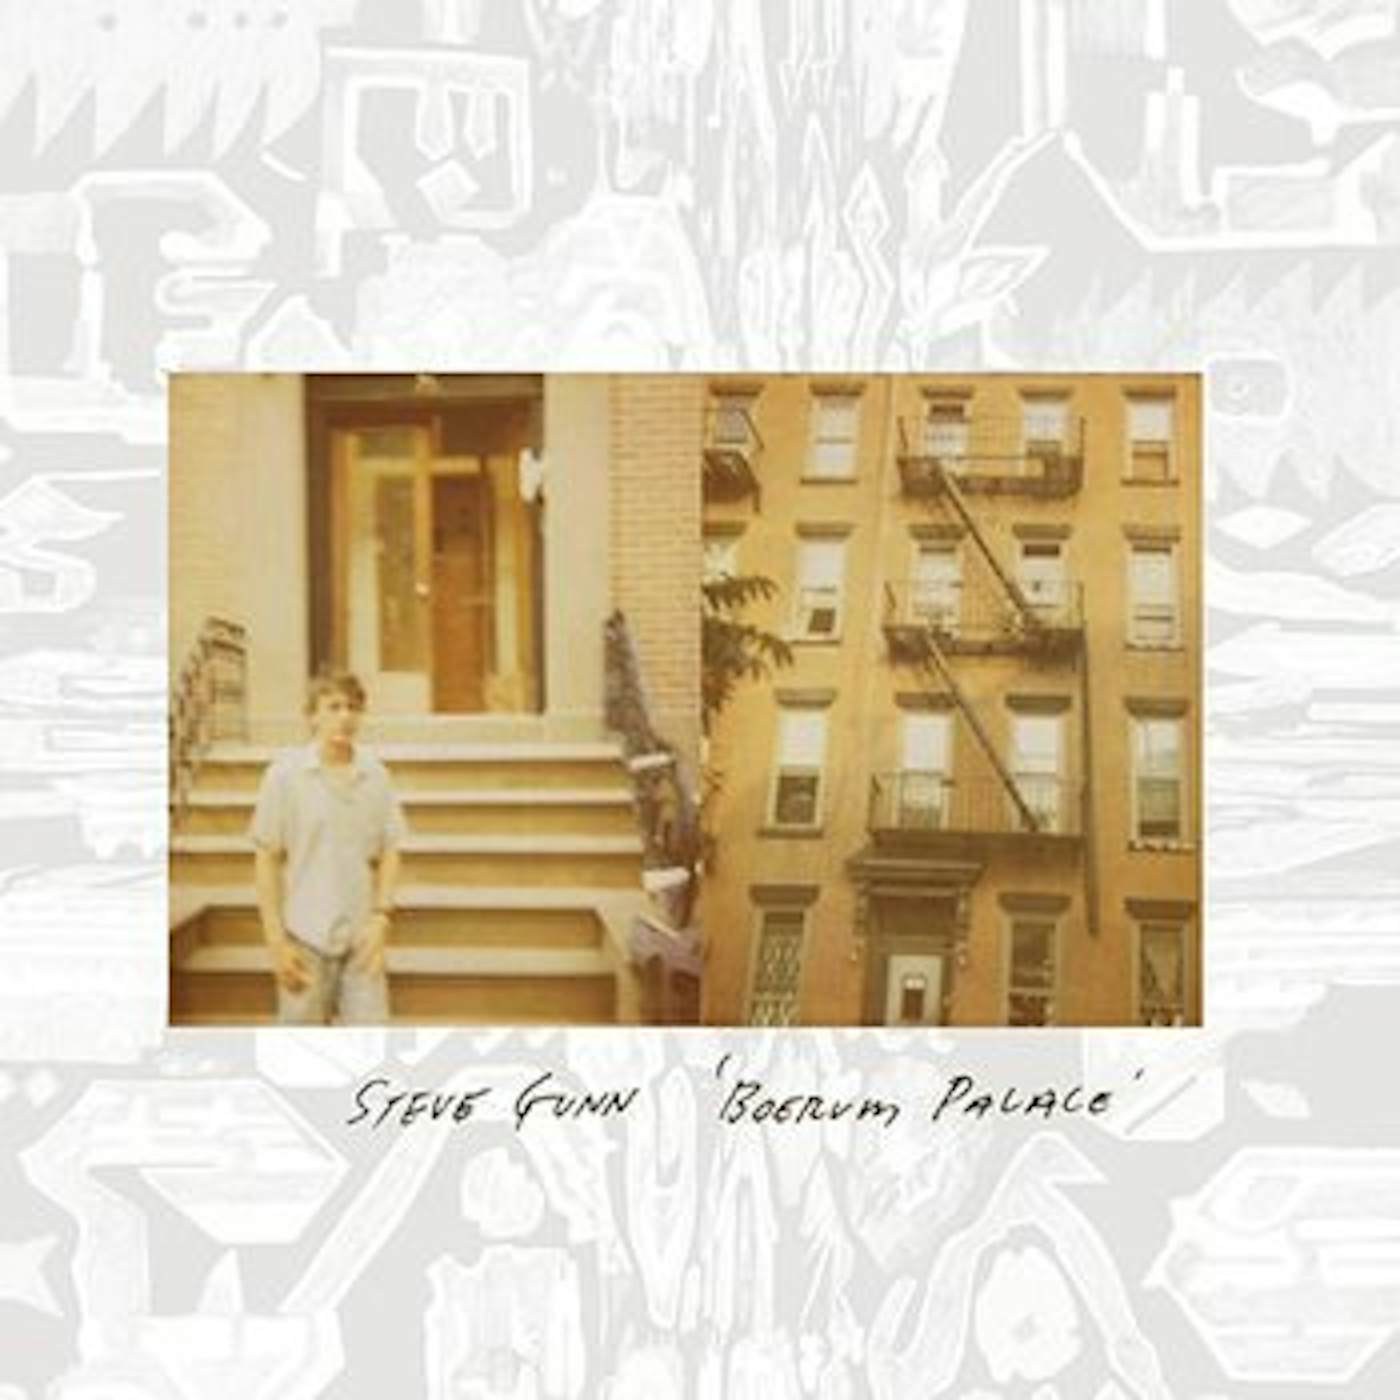 Steve Gunn & Mike Cooper Boerum Palace Vinyl Record